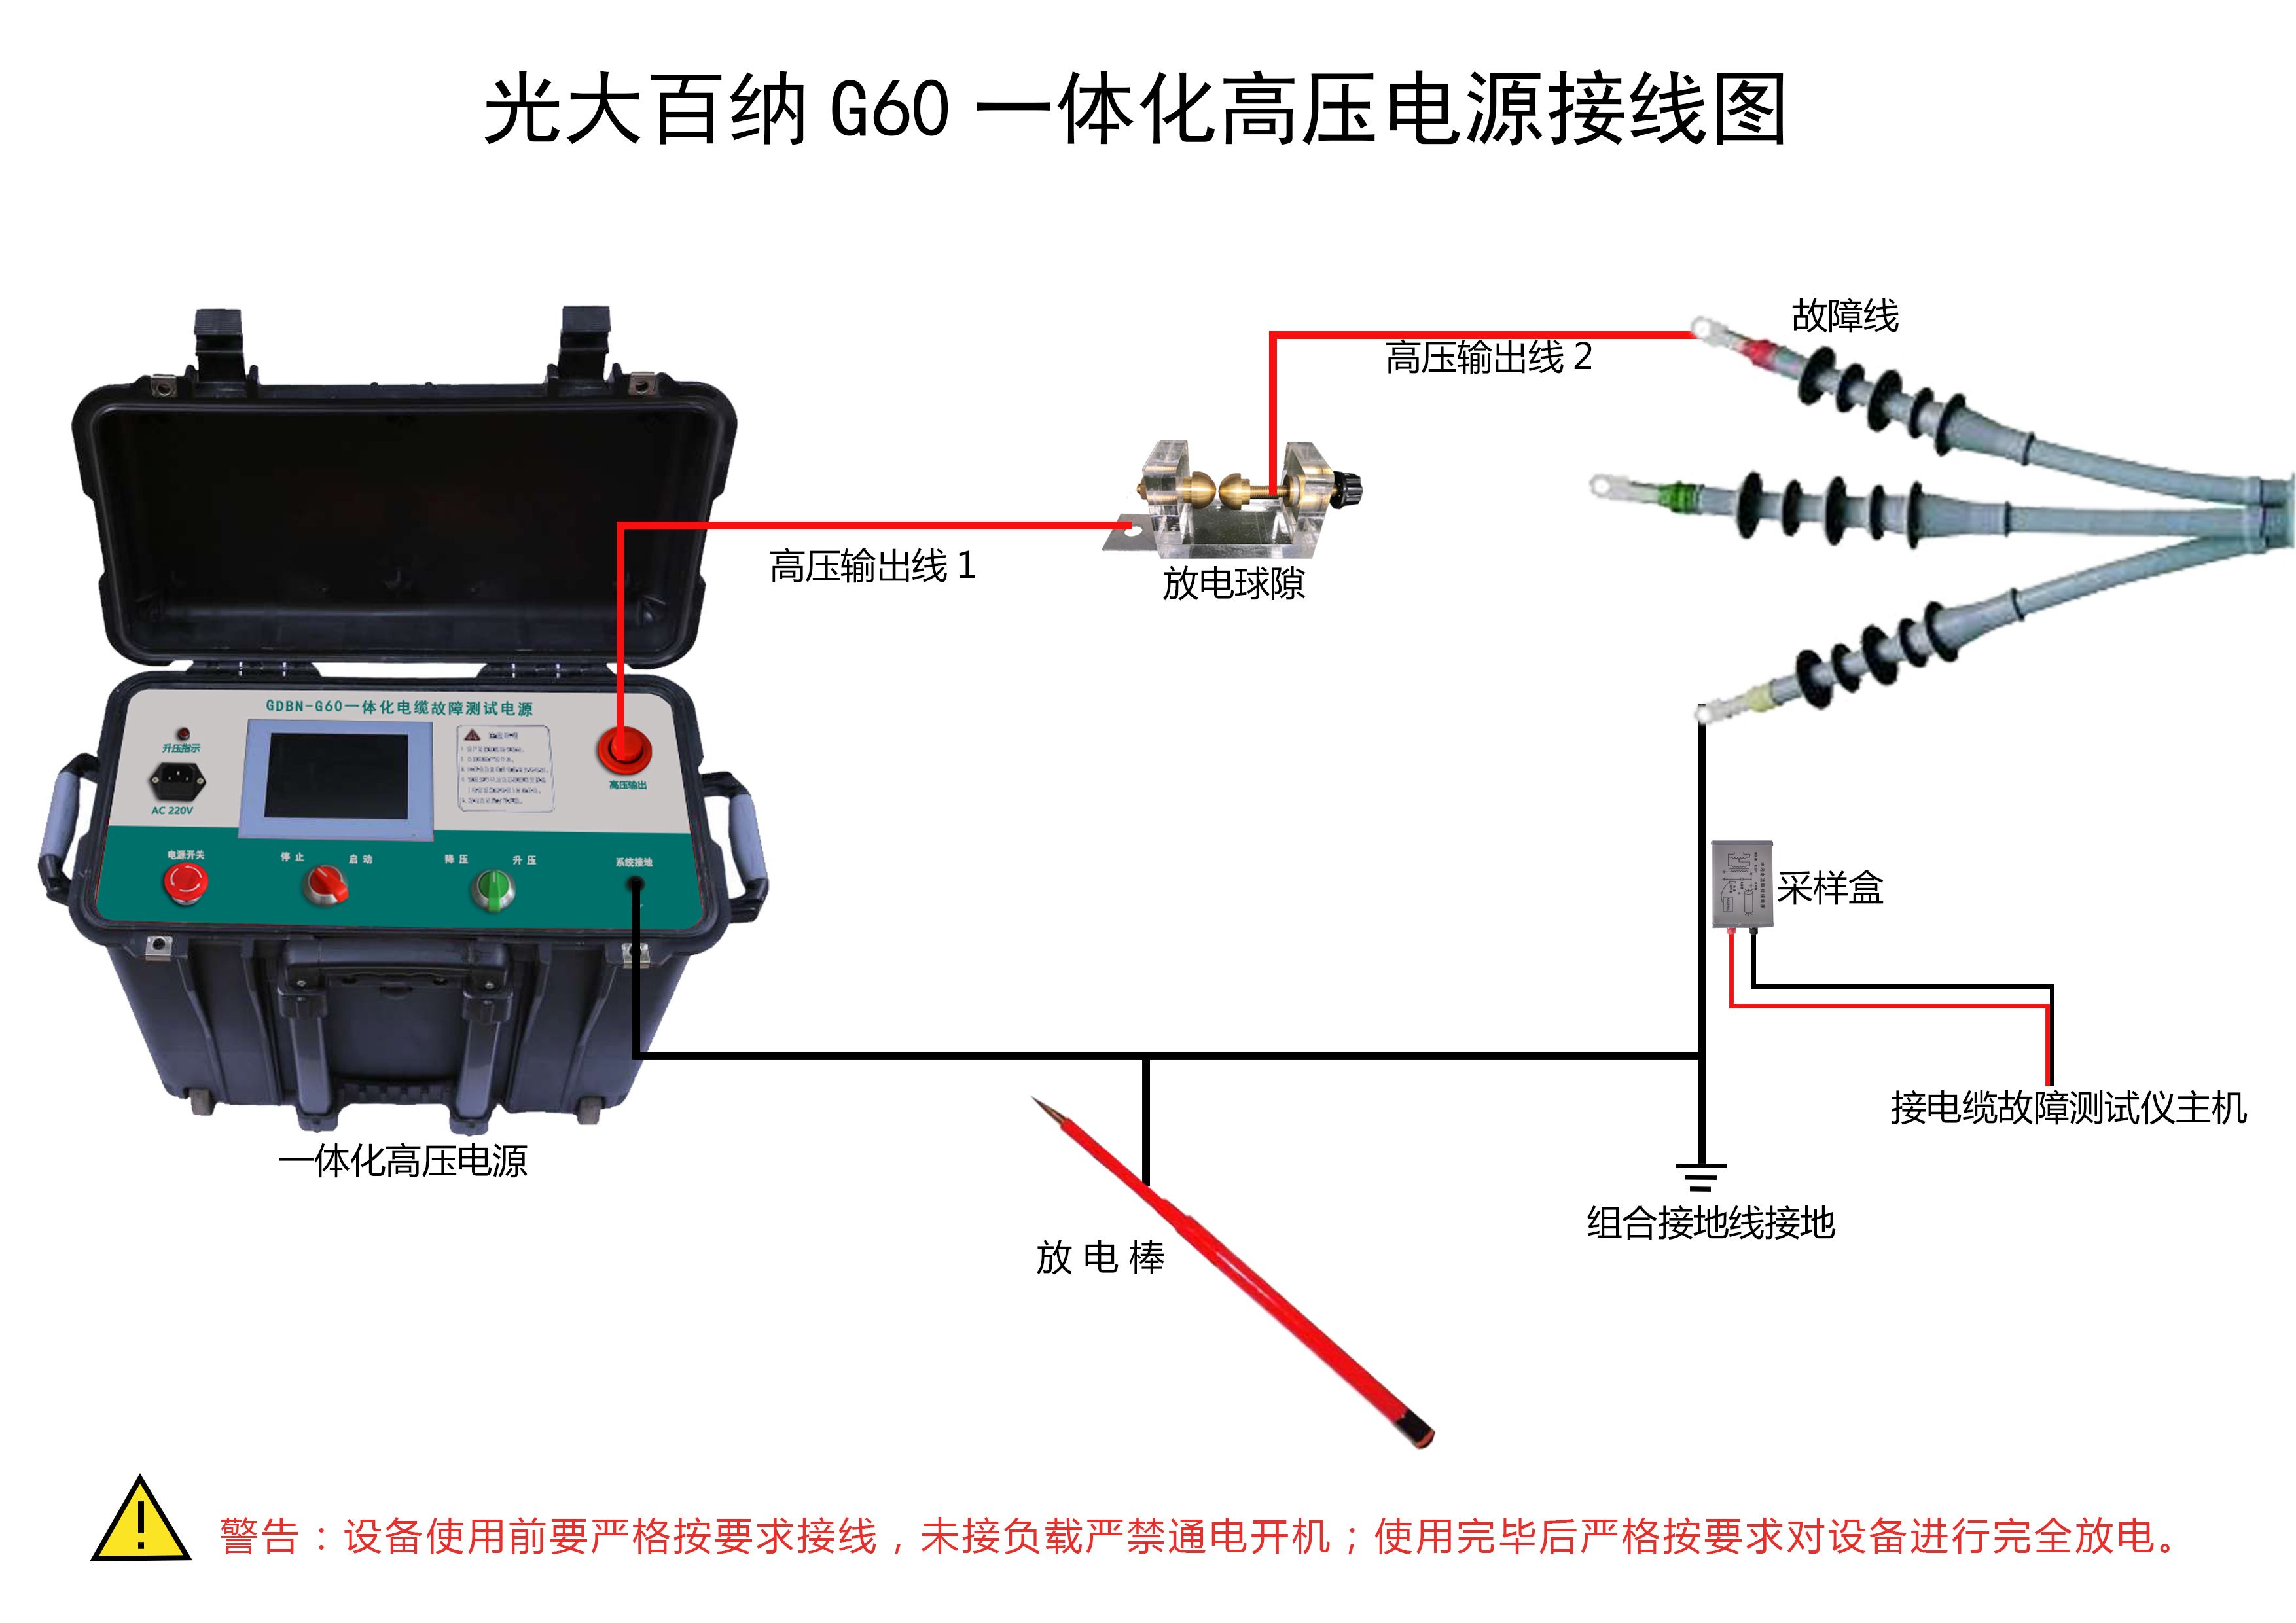 GDBN-G60電纜測試高壓信號發生器接線示意圖